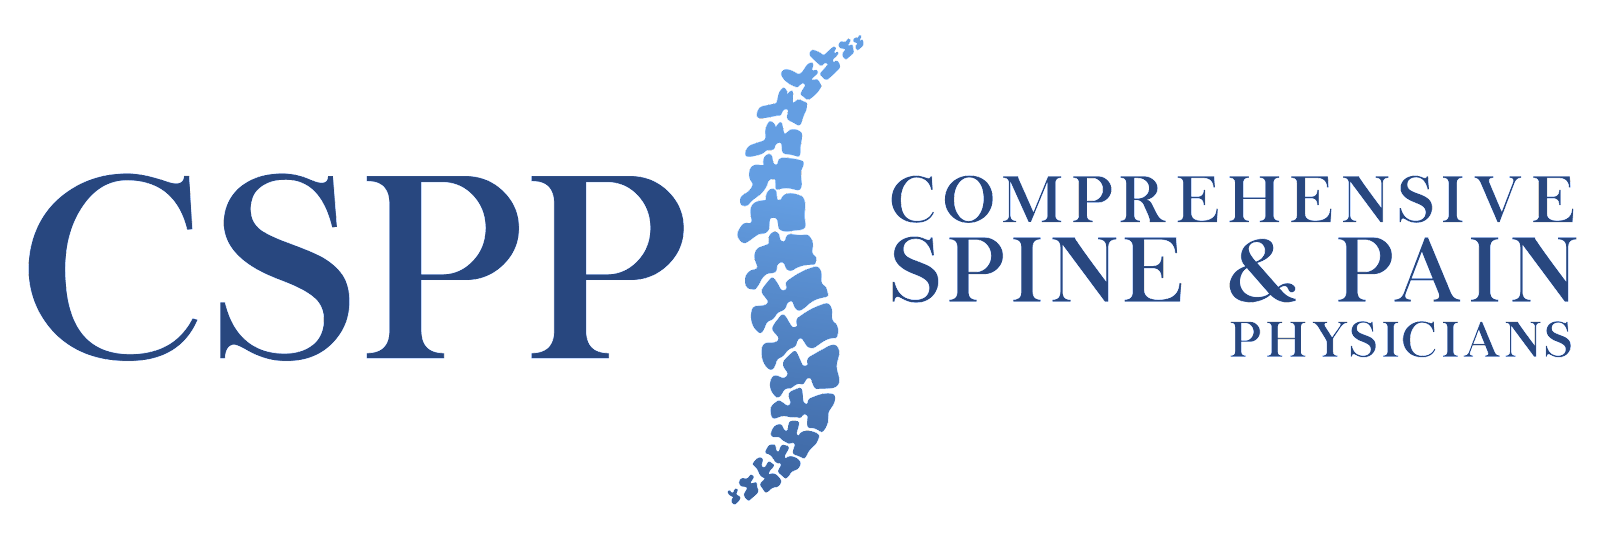 Comprehensive Spine & Pain Physicians - Burbank Logo